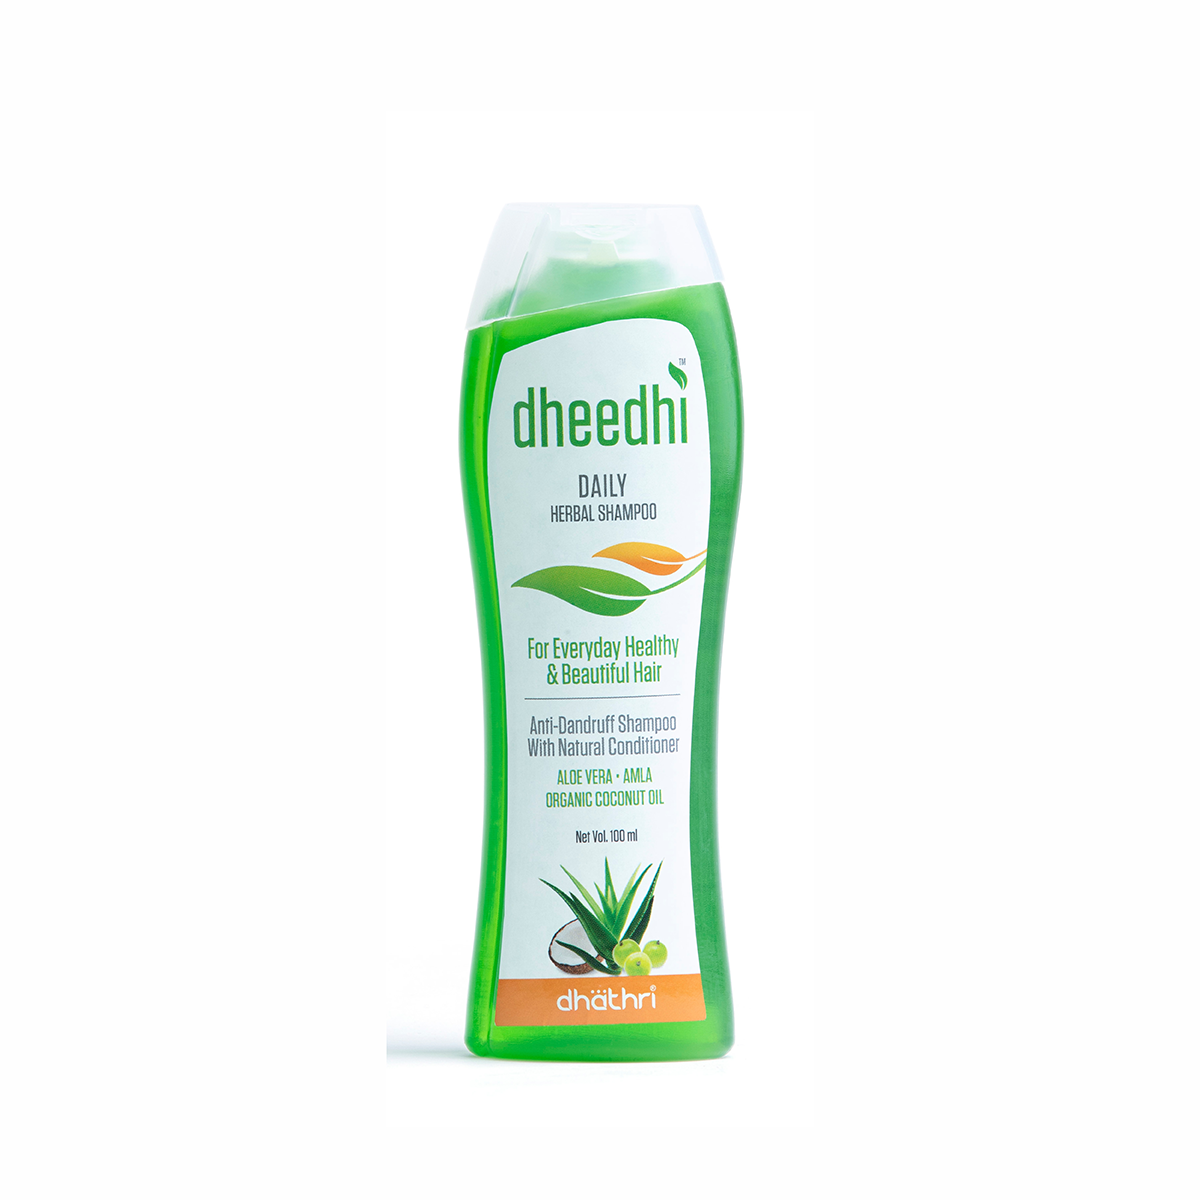 Shop Dhathri Dheedhi Shampoo 100ml at price 98.00 from Dhathri Online - Ayush Care